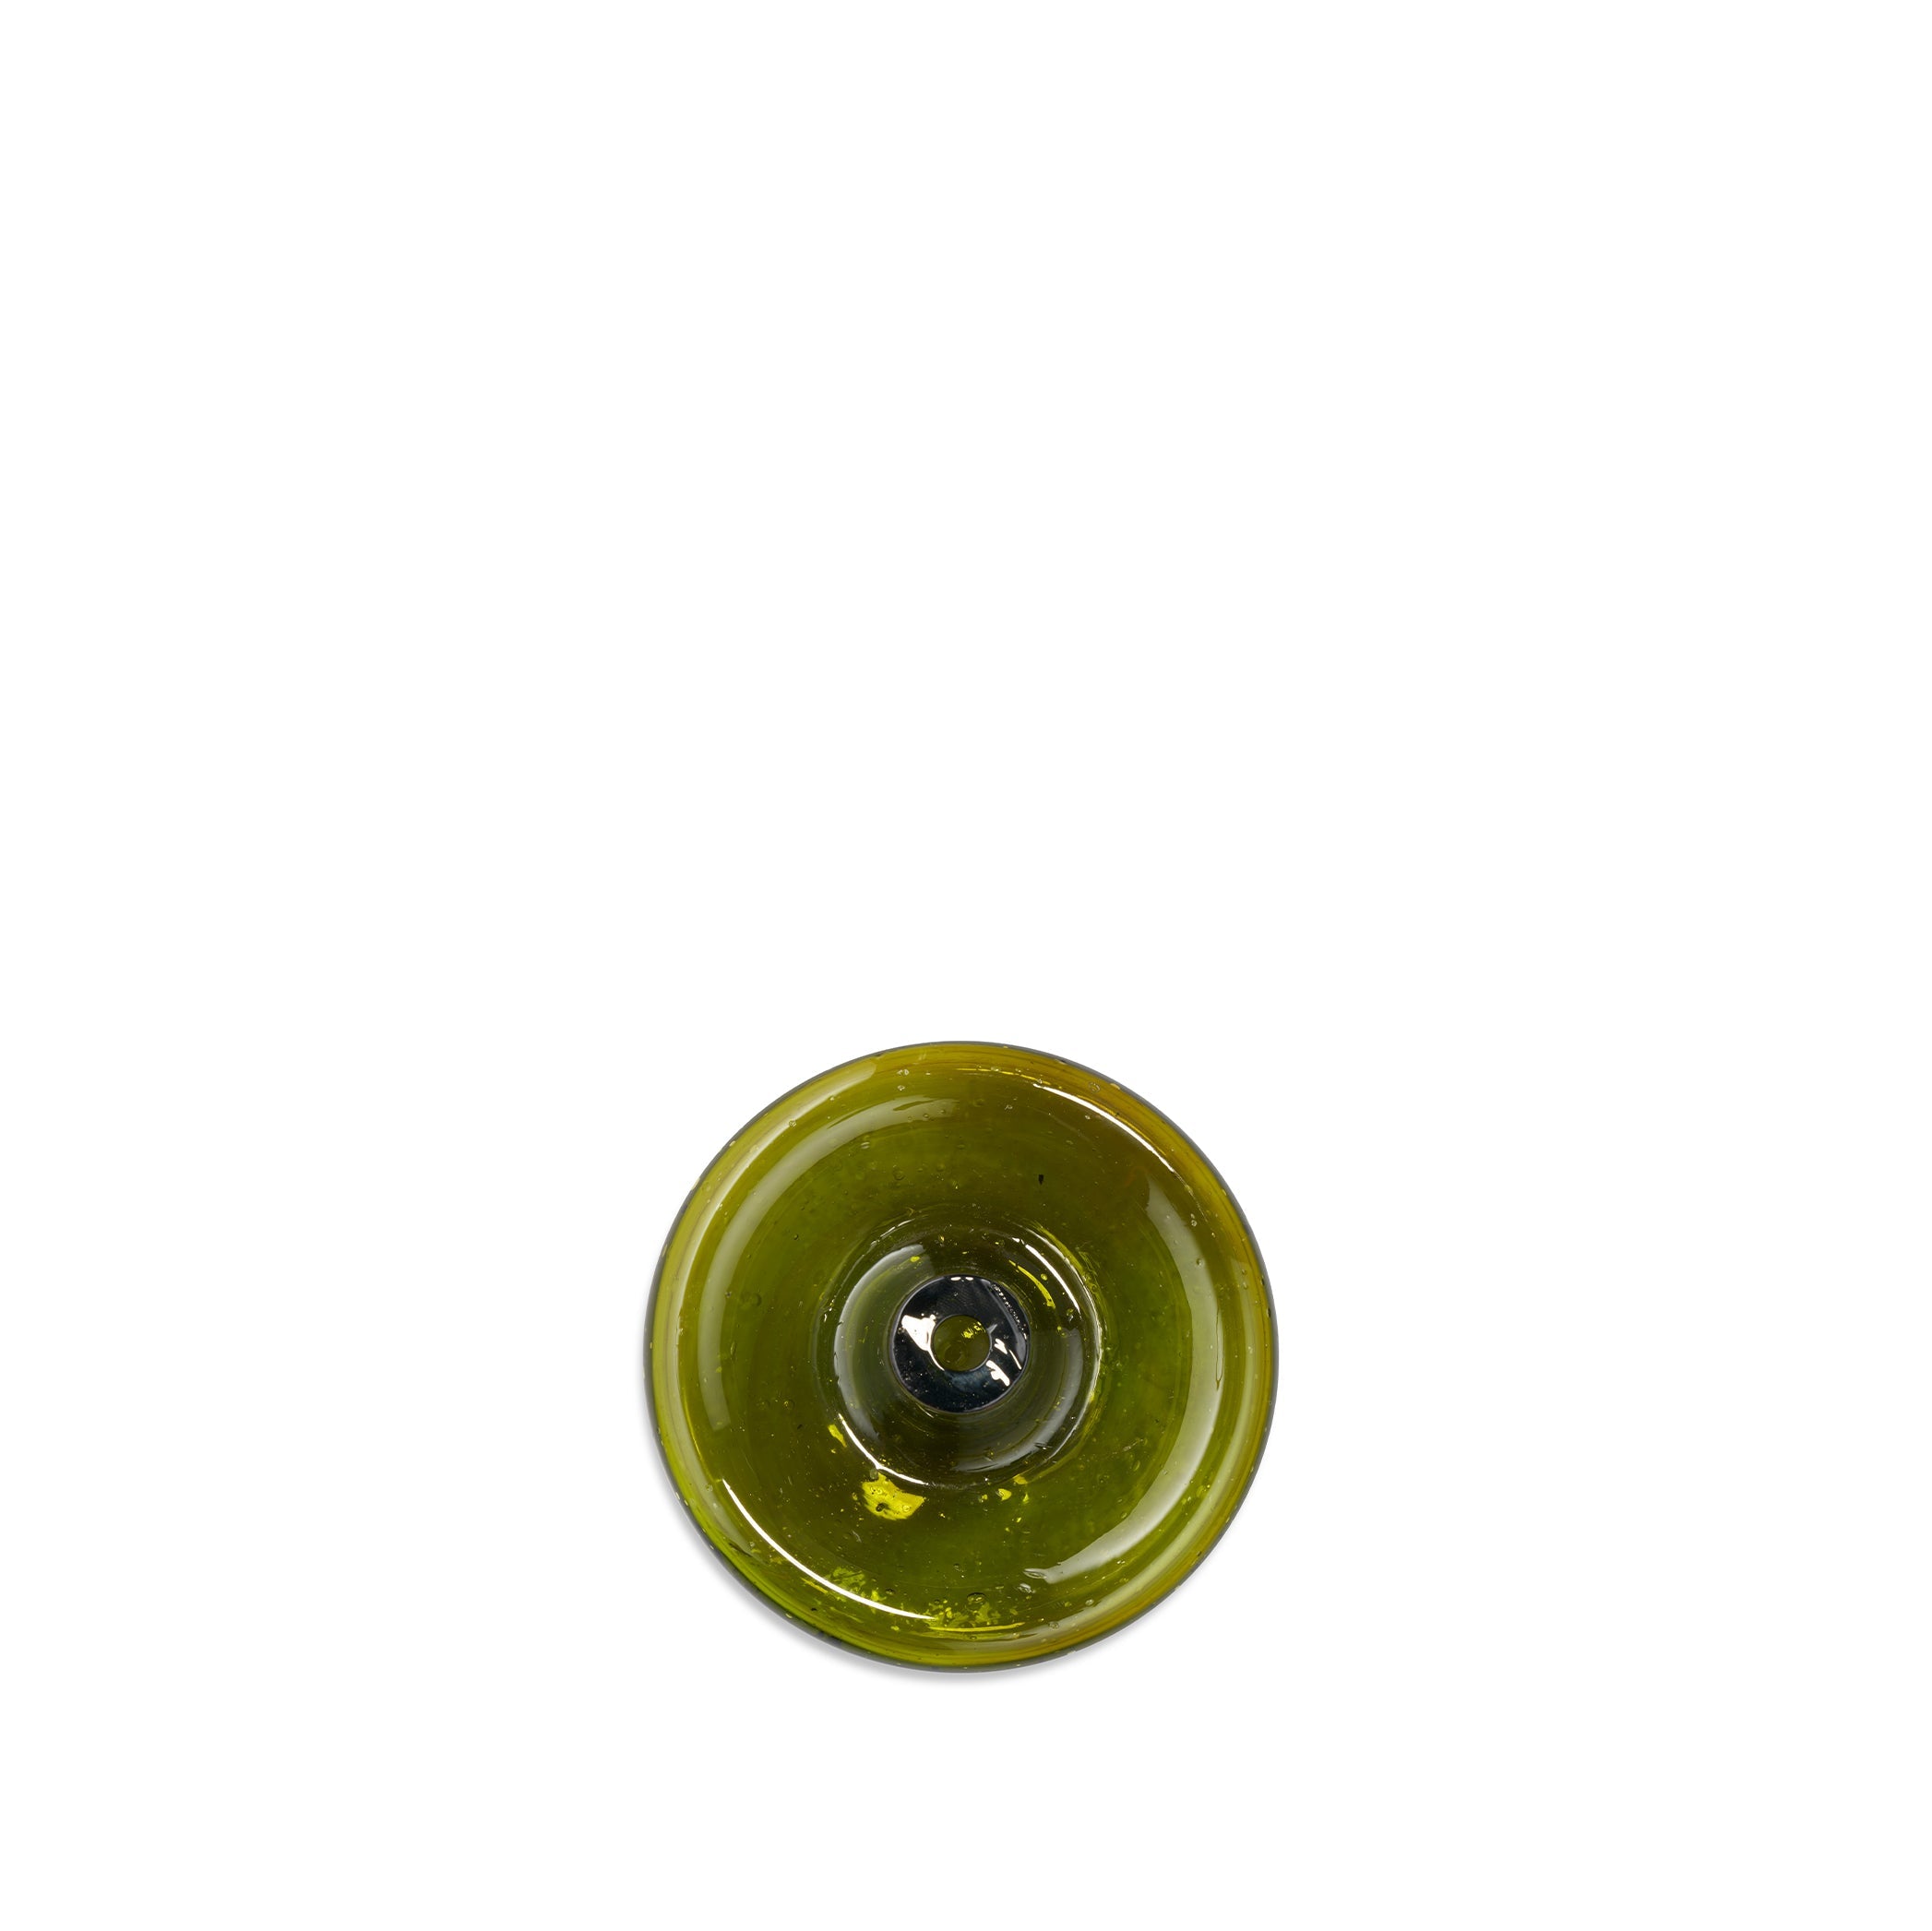 Handblown Glass Incense Holder in Olive Green, 12cm